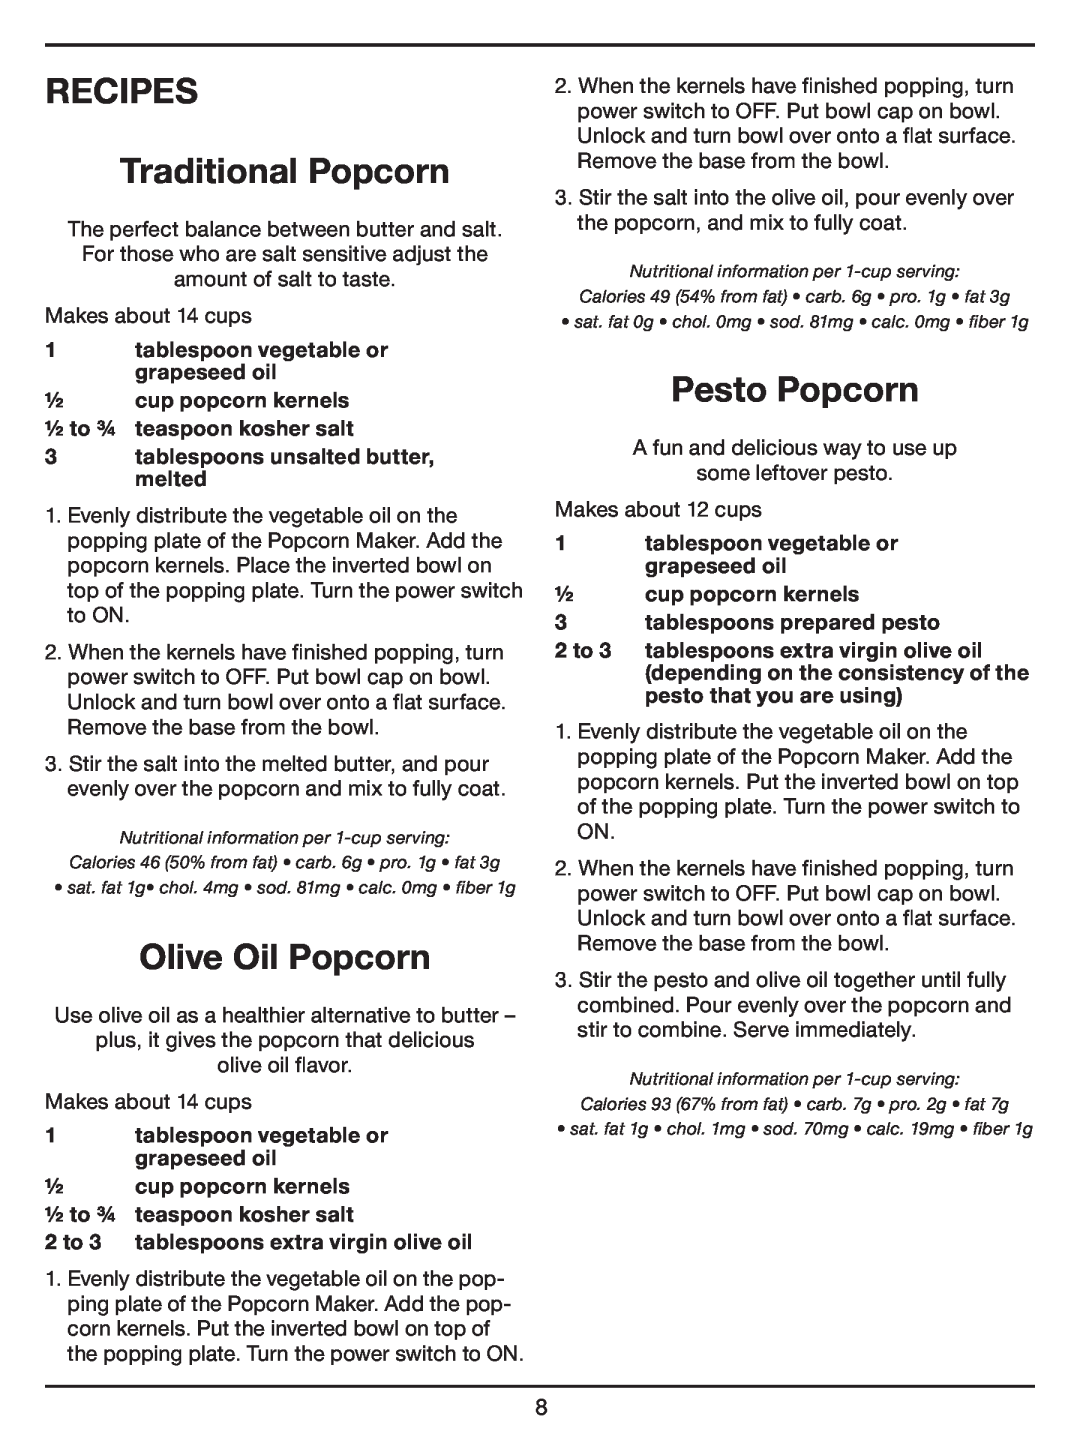 Cuisinart CPM-700 Series manual RECIPES Traditional Popcorn, Olive Oil Popcorn, Pesto Popcorn, tablespoons prepared pesto 